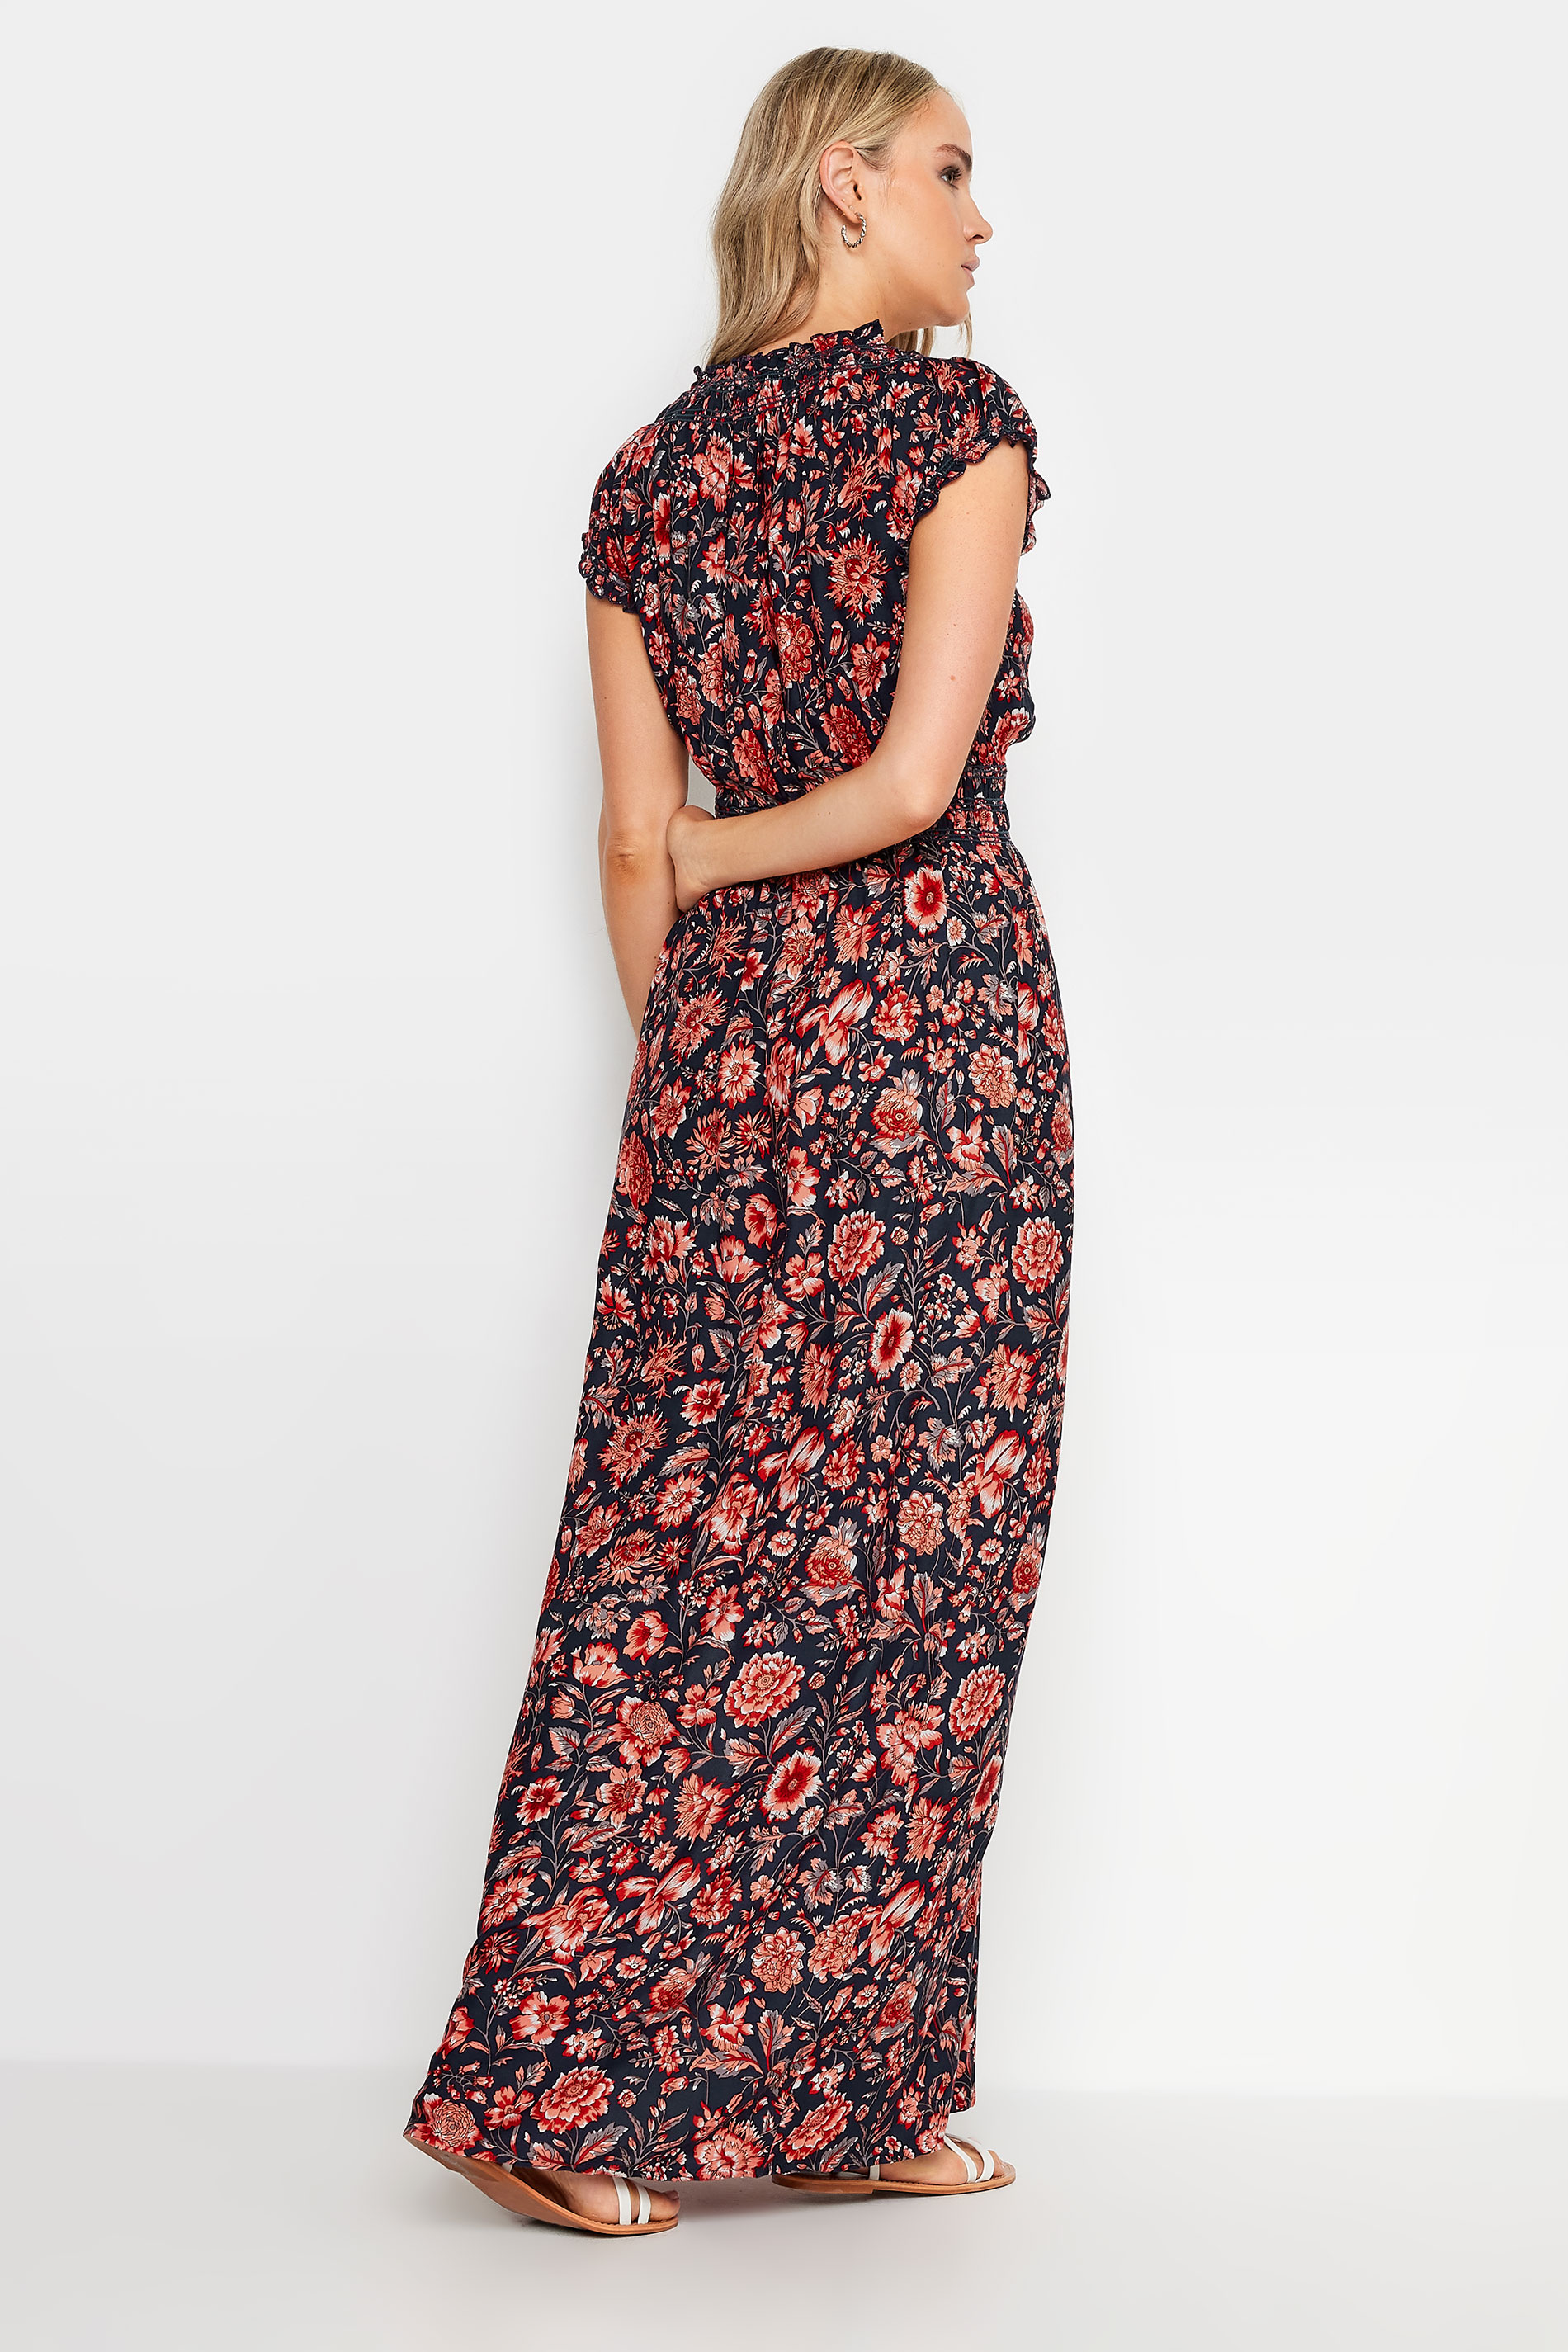 LTS Tall Women's Red Floral Maxi Dress | Long Tall Sally 3